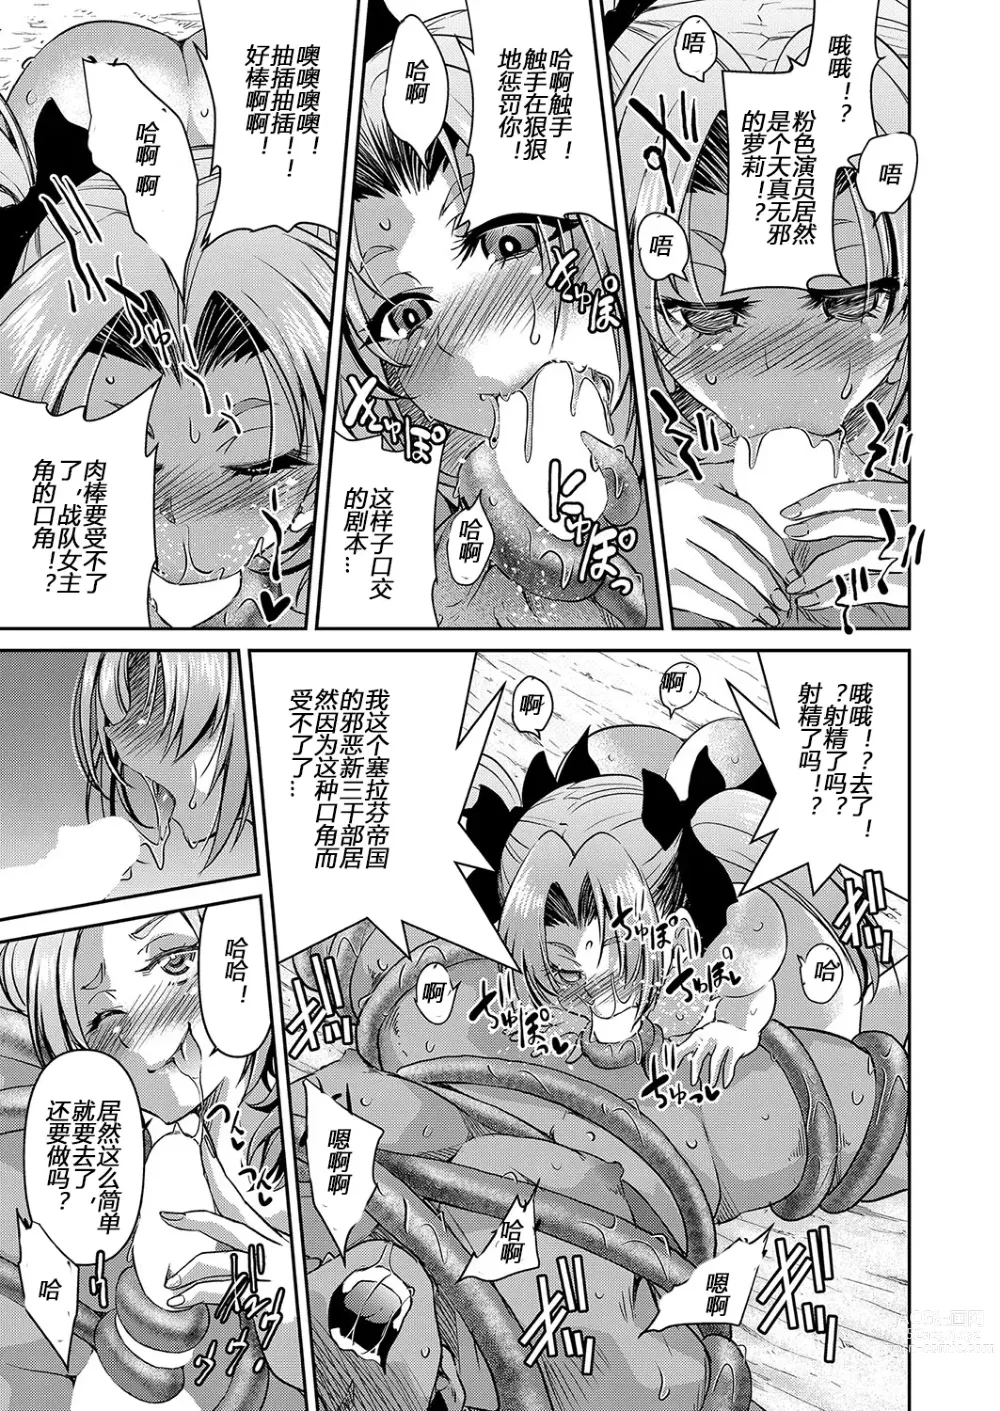 Page 183 of manga Yousei Sentai Actliver